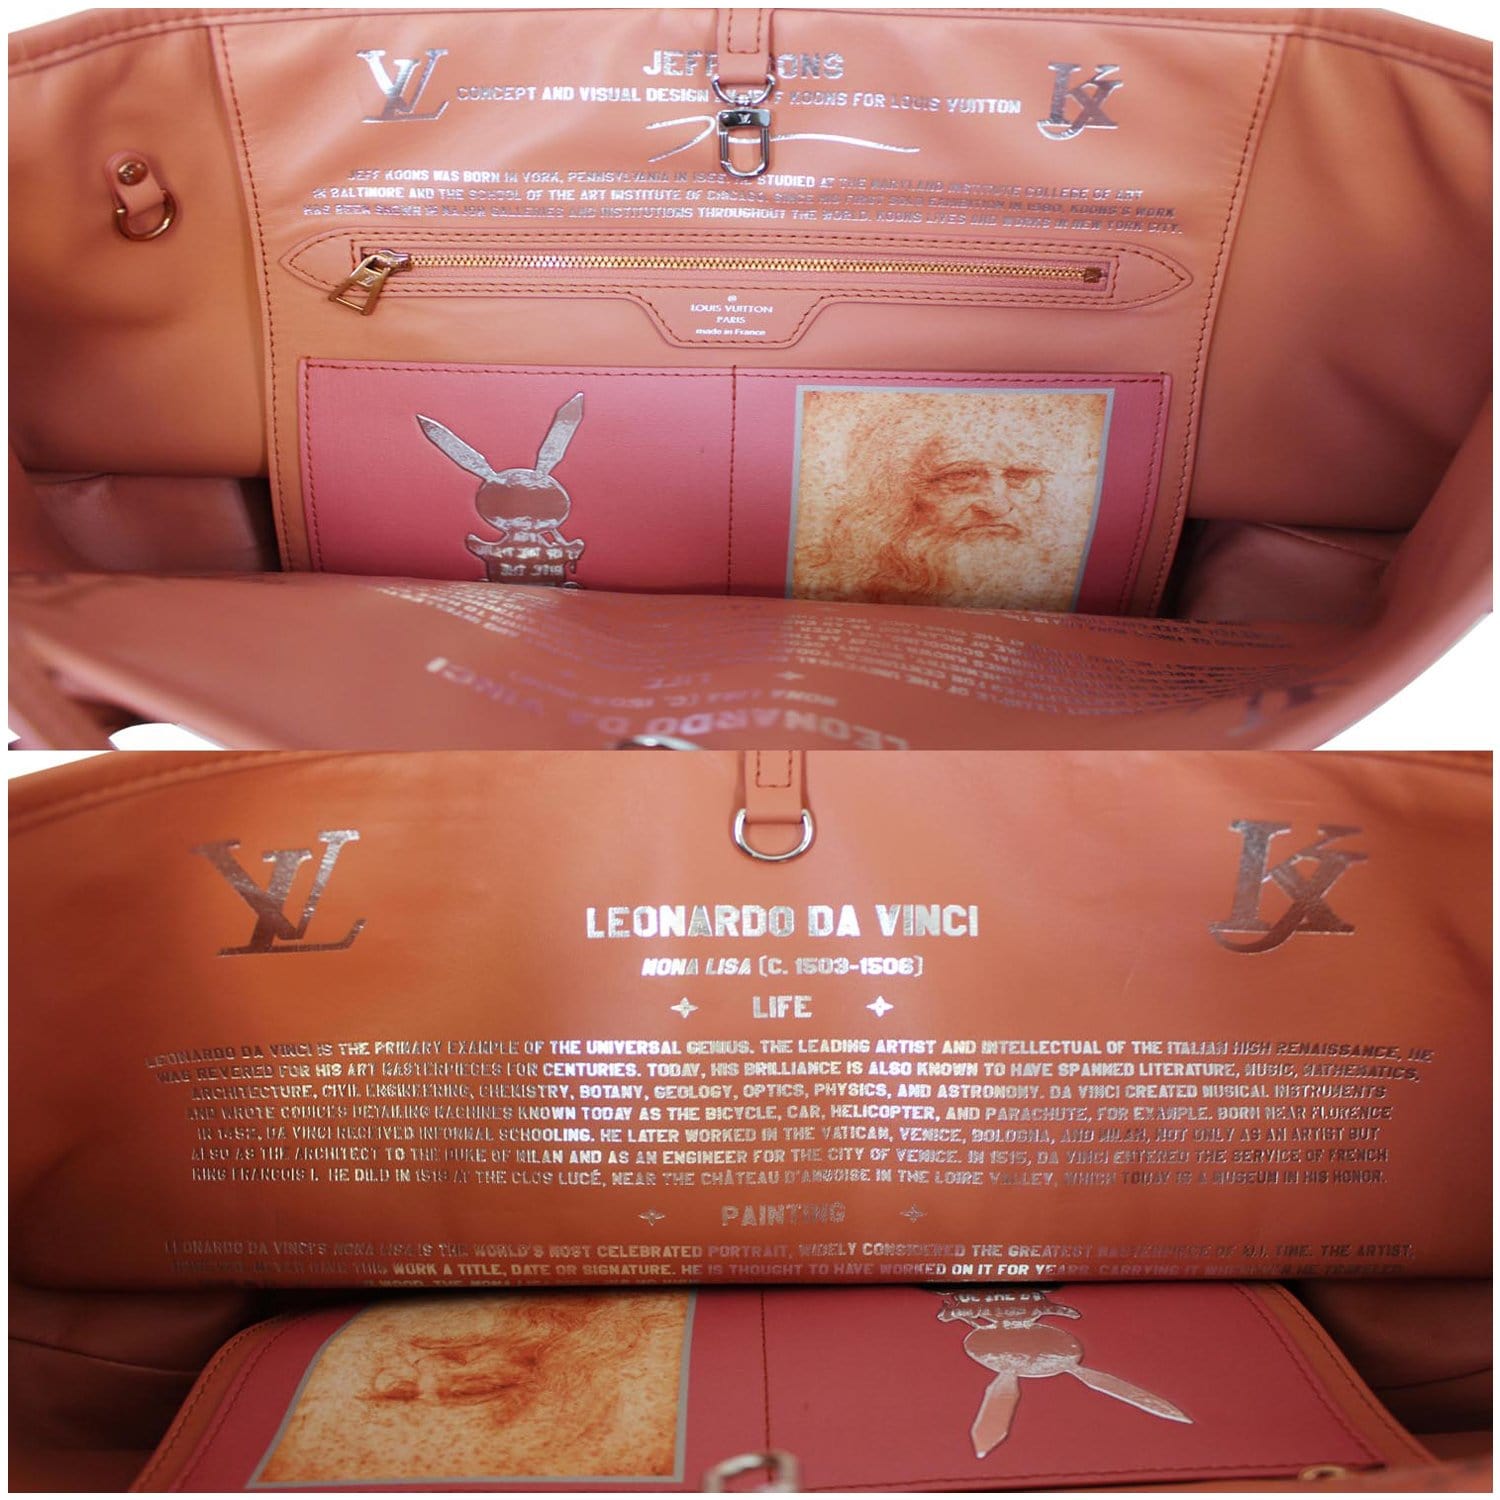 Louis Vuitton Chain Bag Limited Edition with designer Jeff Coons - Da Vinci